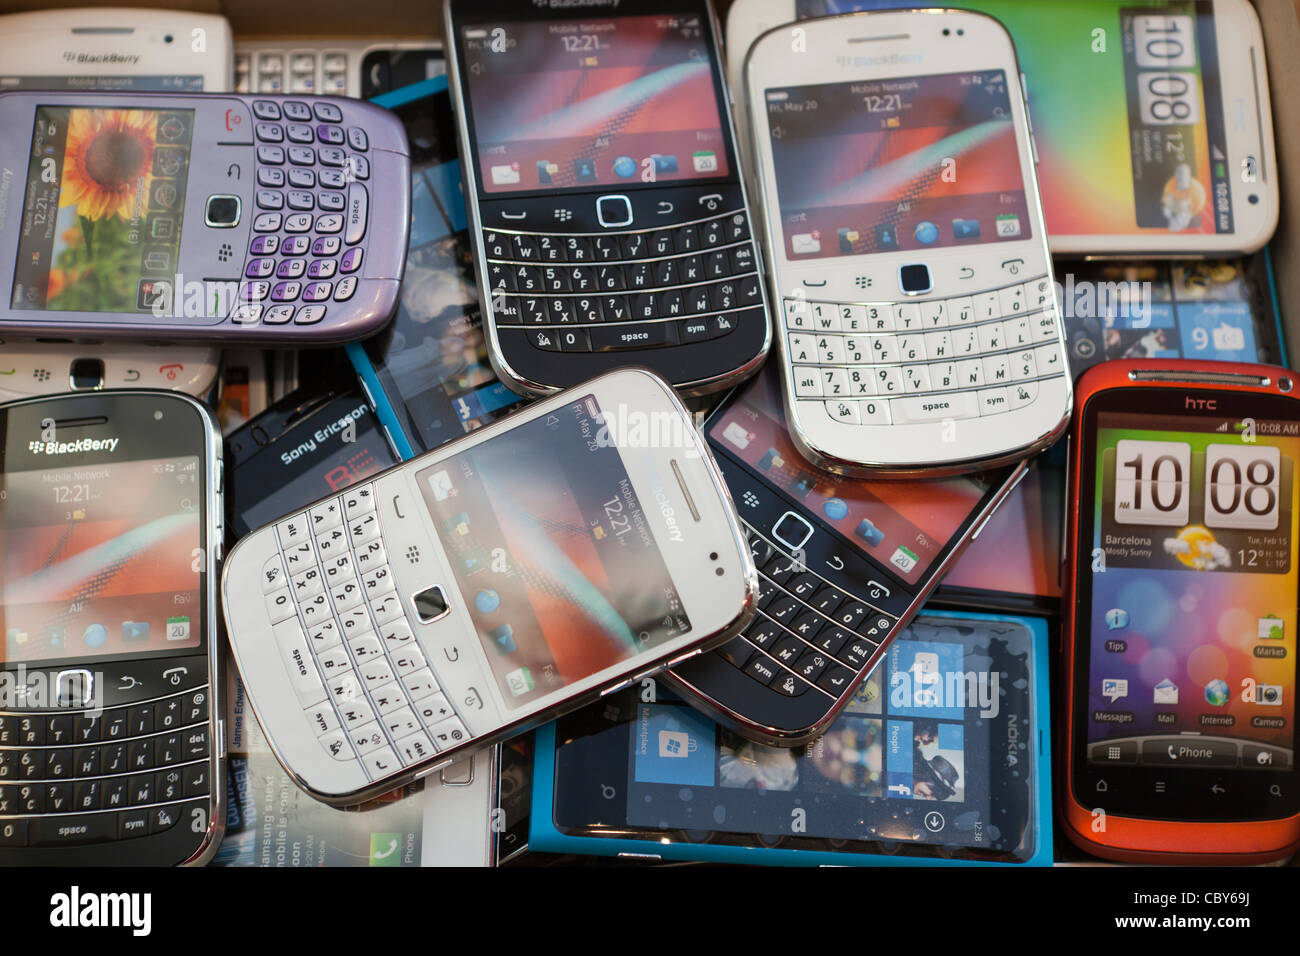 Pile of smart phones Stock Photo